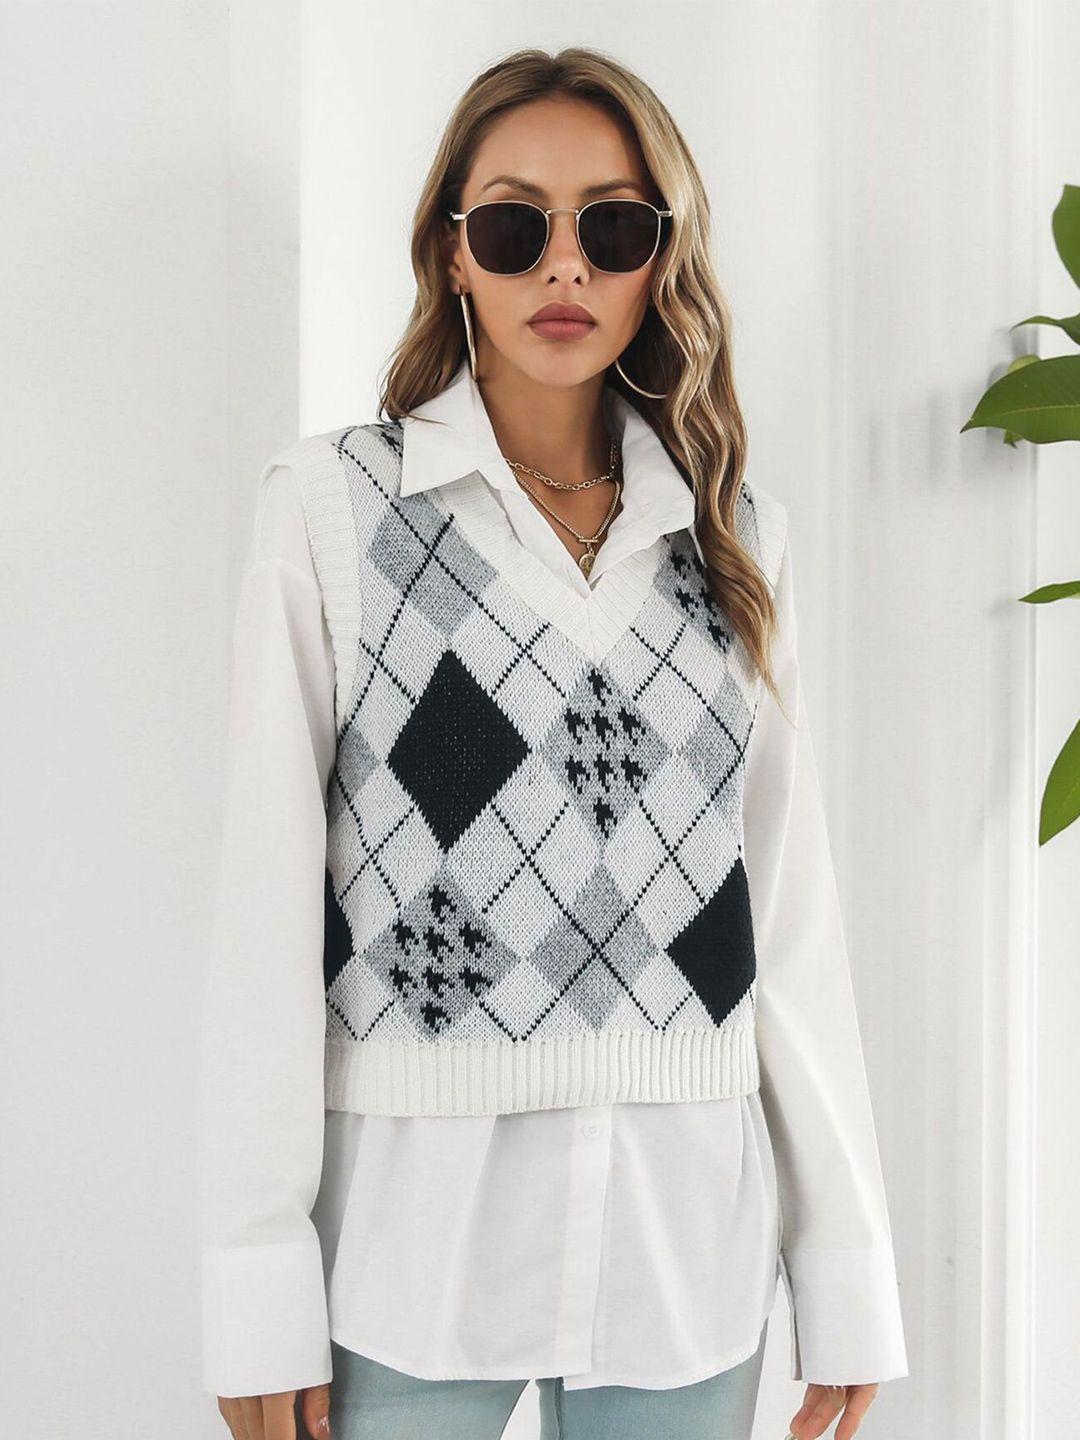 stylecast women white & black printed sweater vest